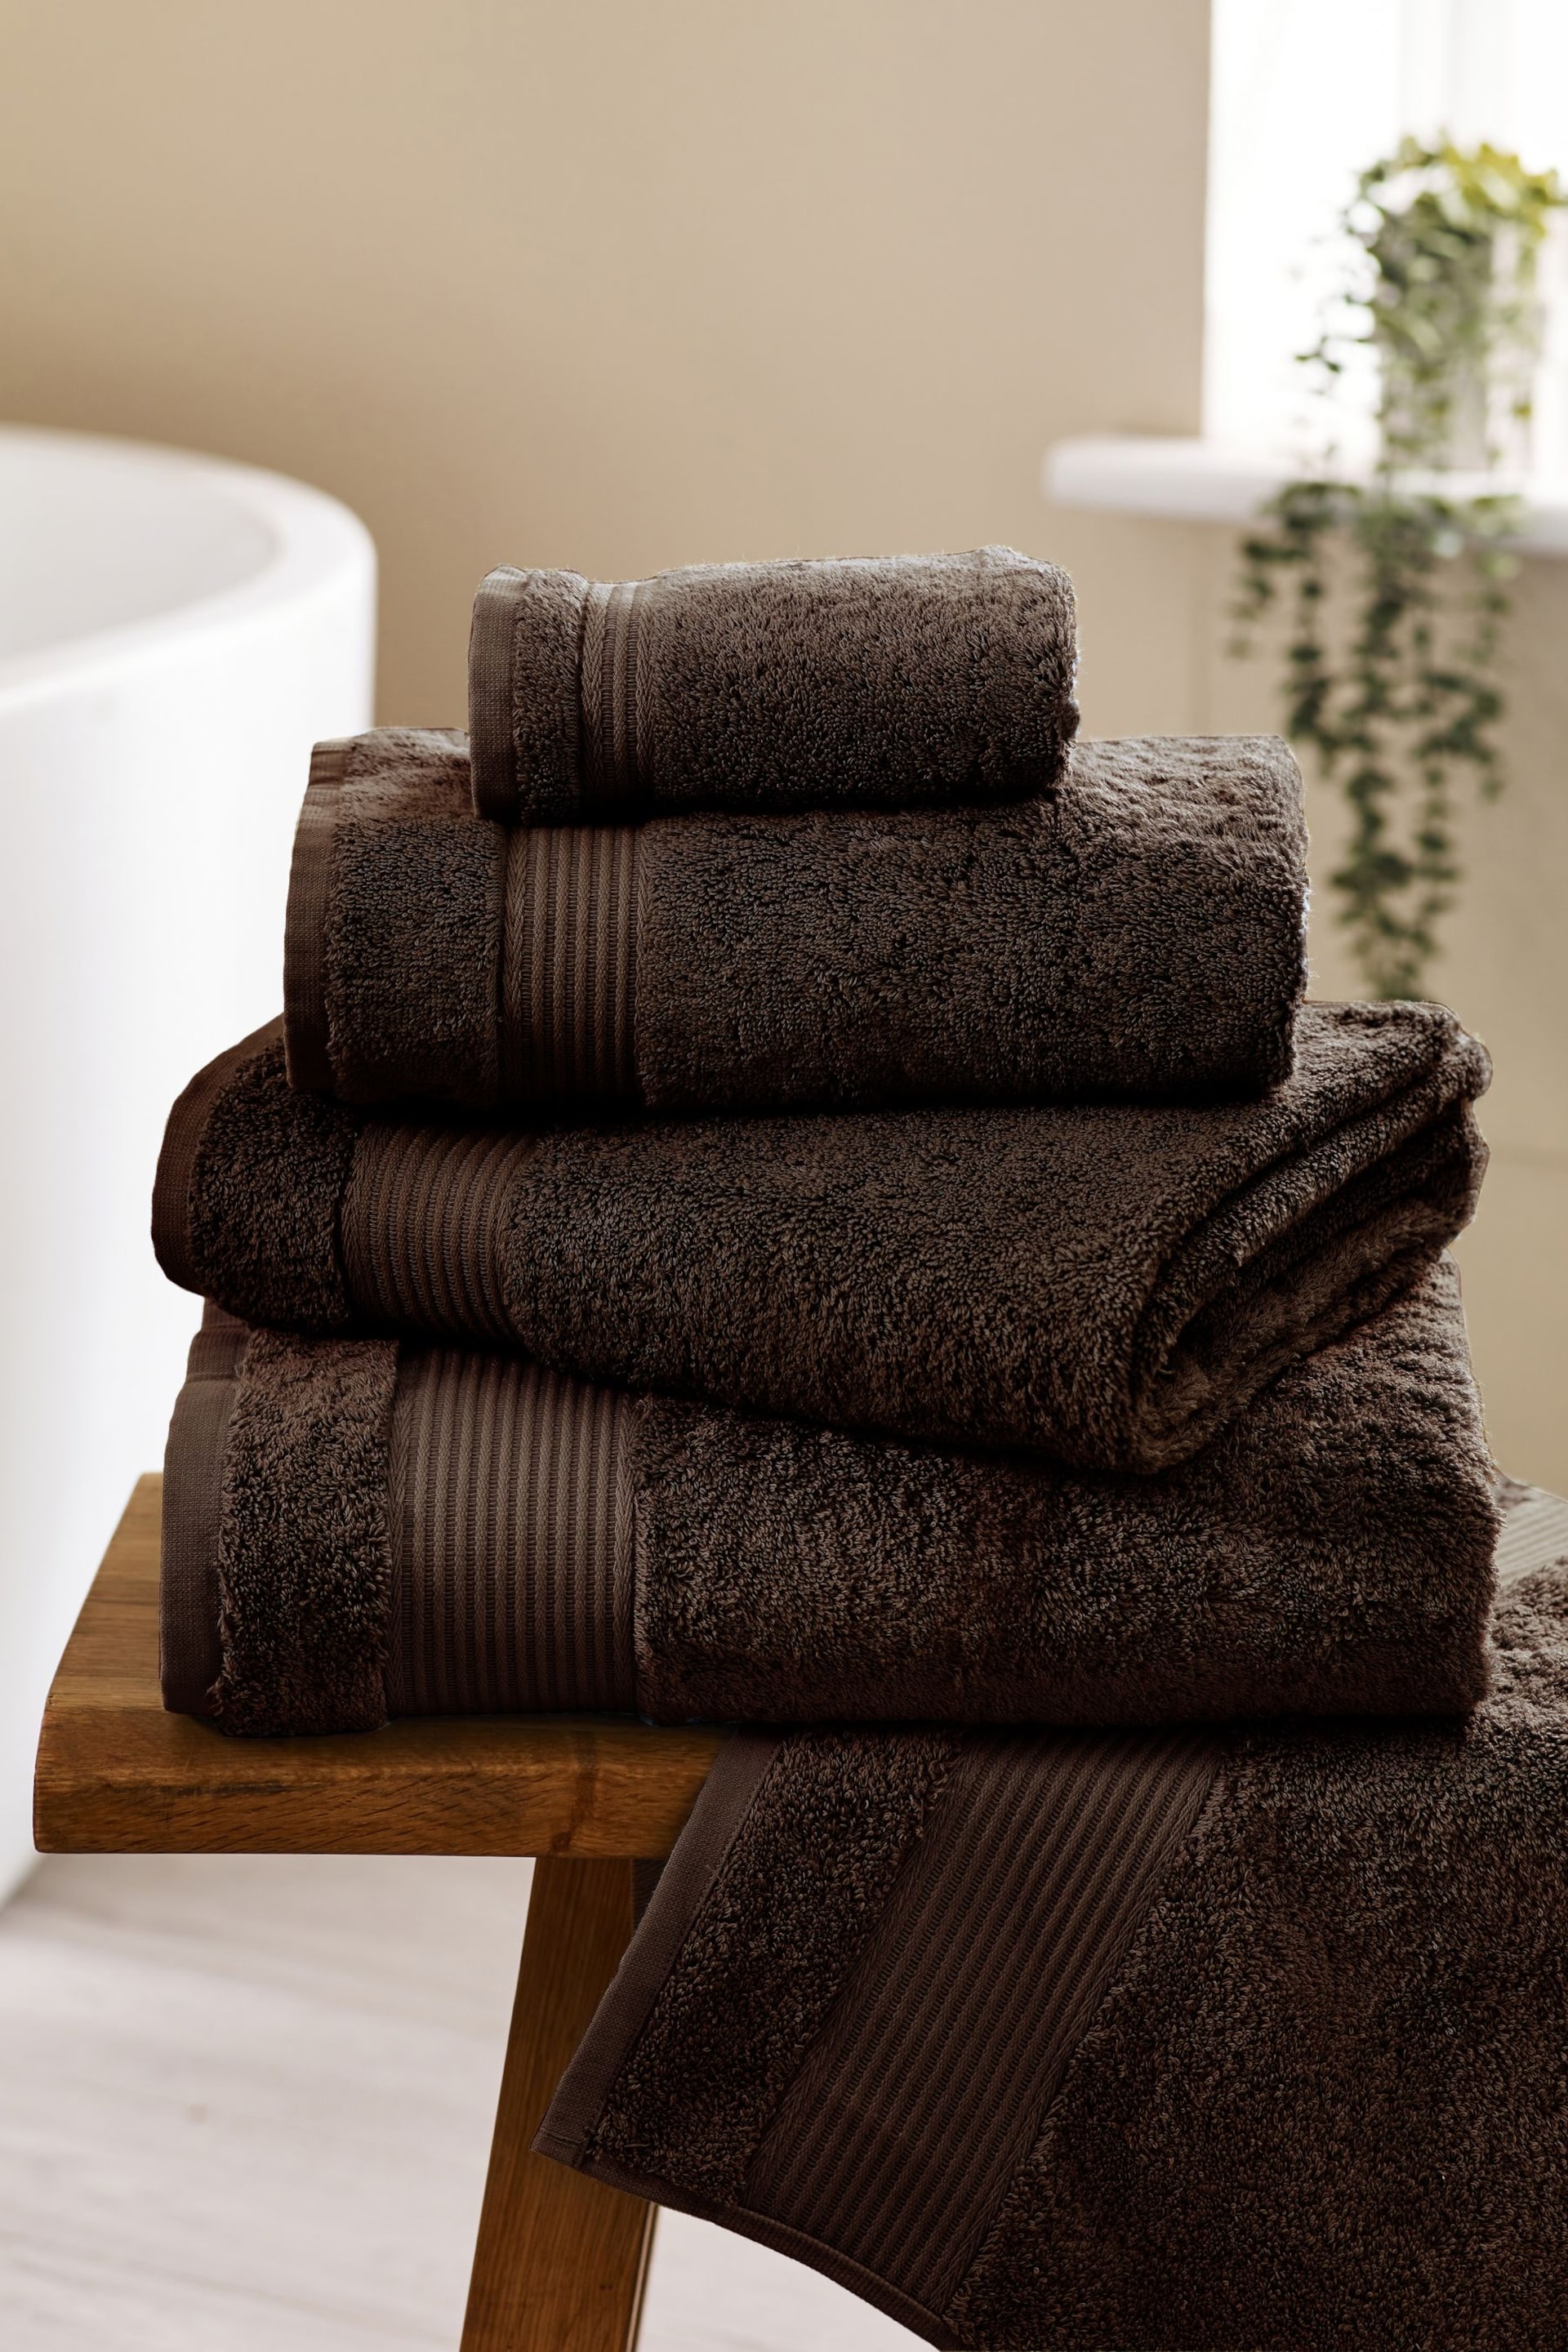 Brown Chocolate Egyptian Cotton Towel - Image 1 of 4